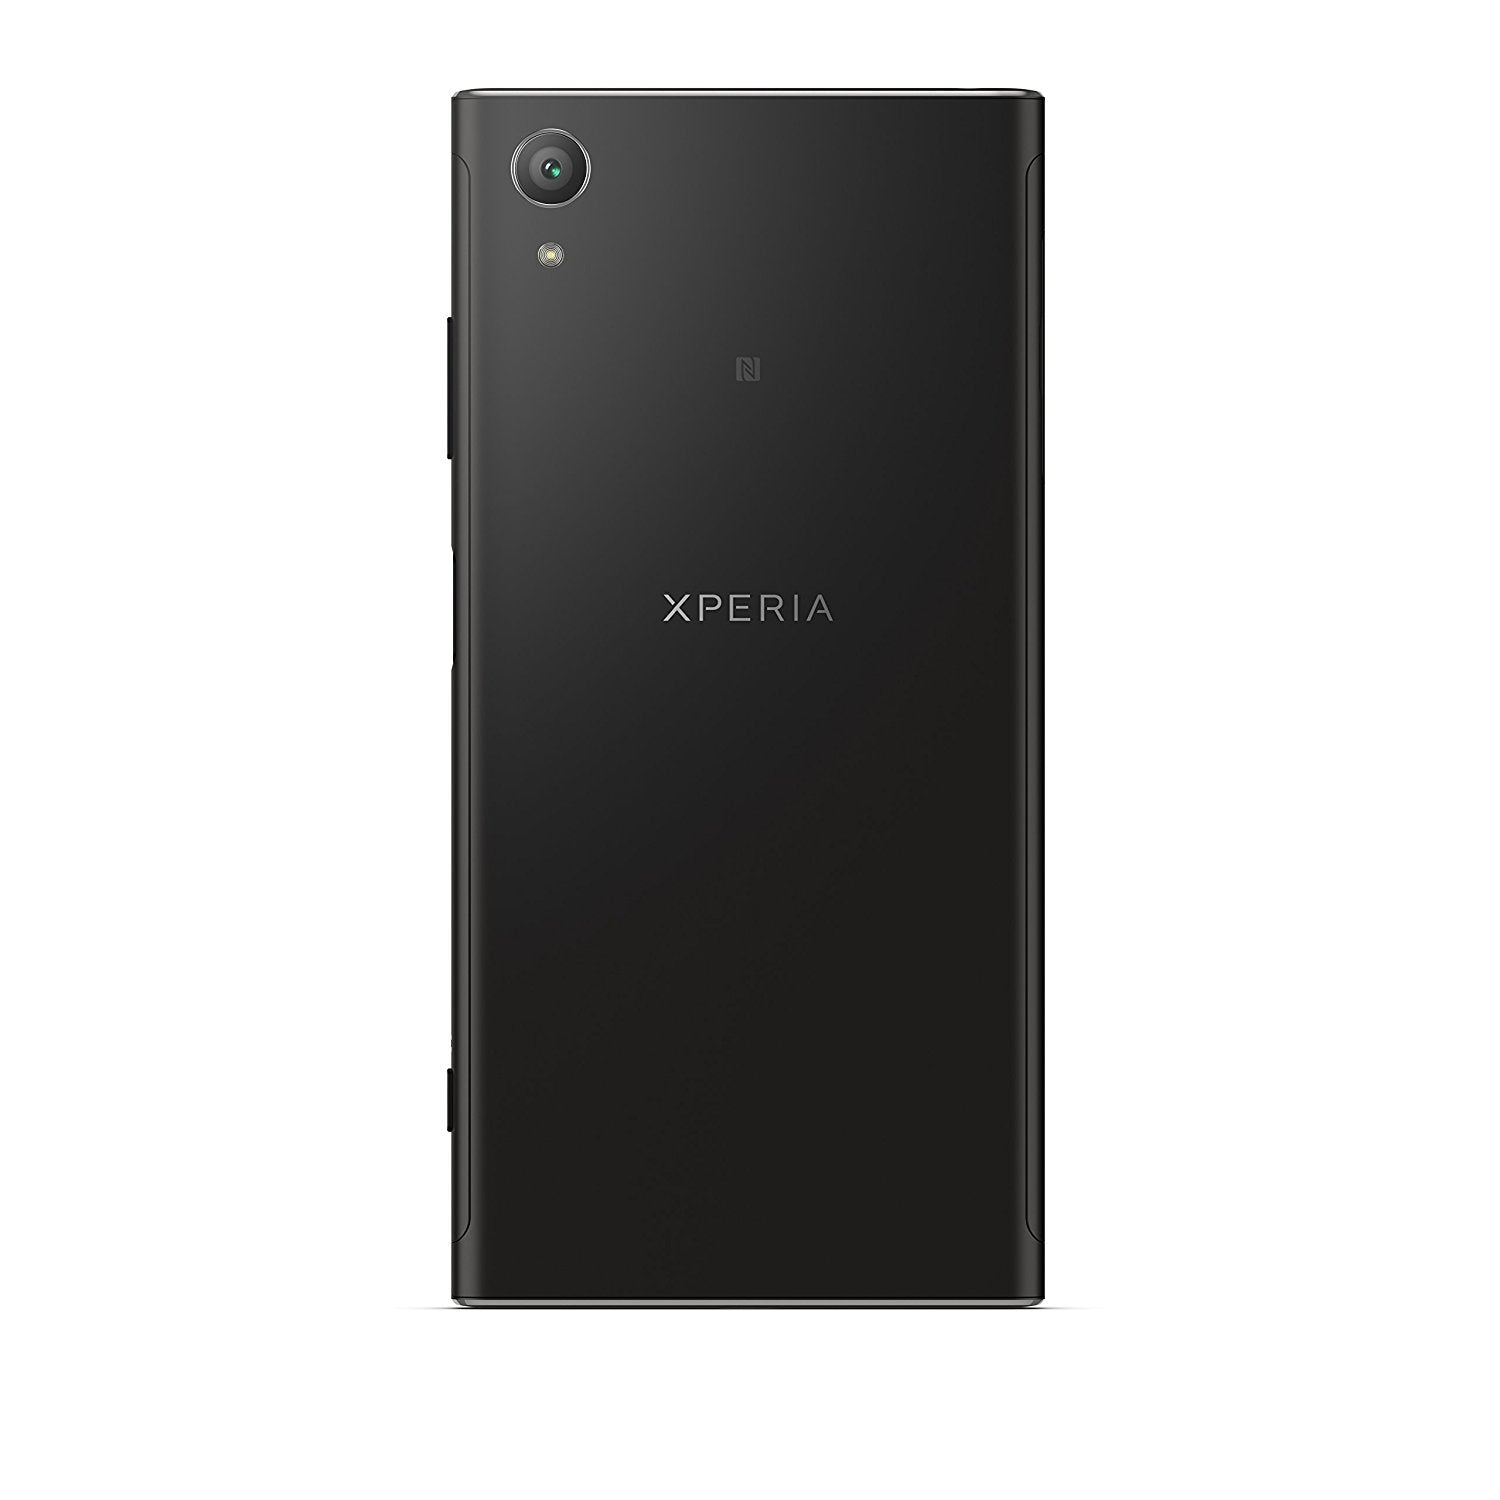 Sony Xperia XA1 Plus - Unlocked Smartphone - 5.5